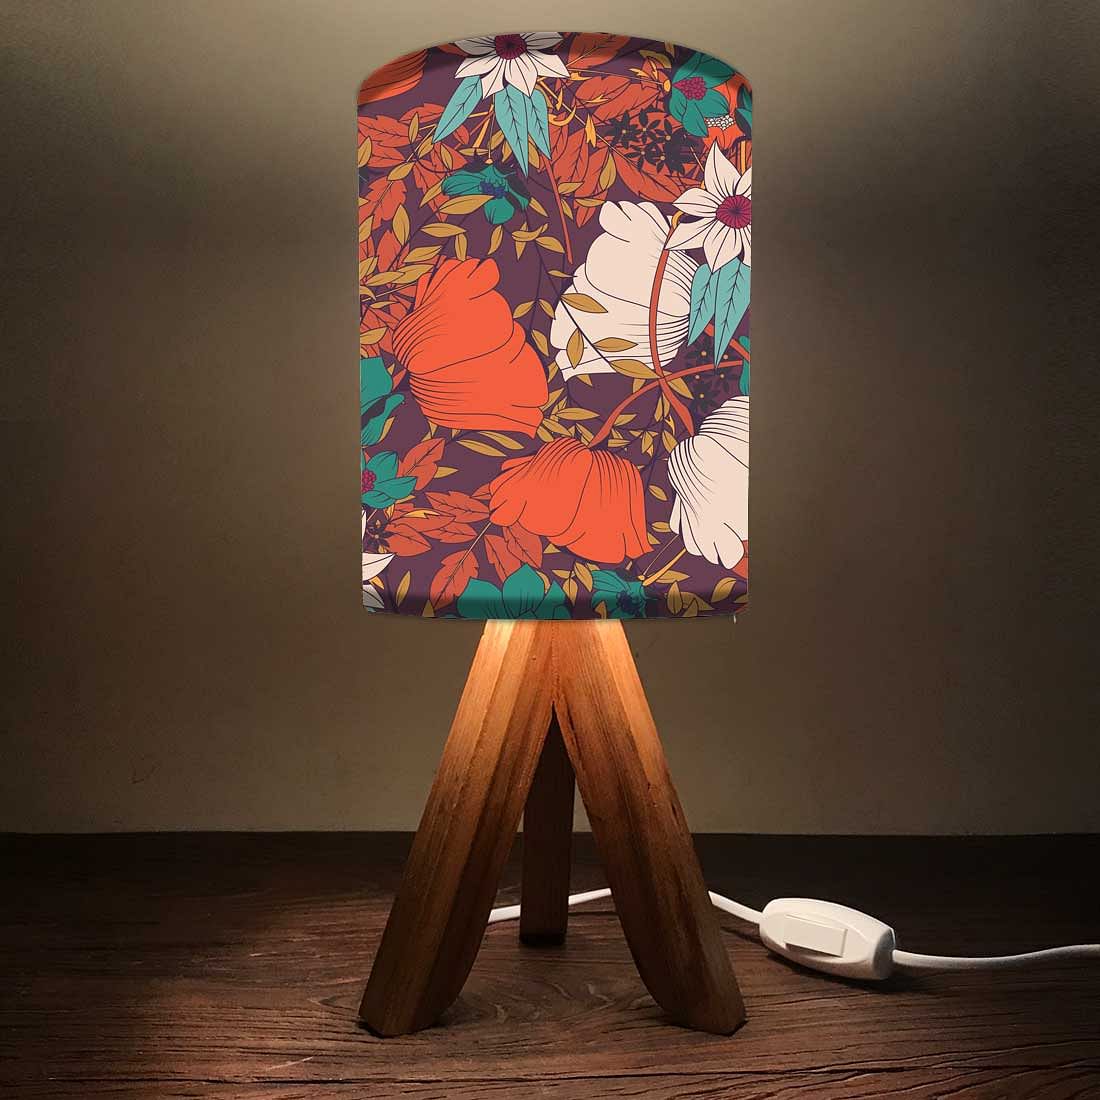 Mini Wooden Lamp Table For Bedroom Living Room-Elegance Orange Nutcase